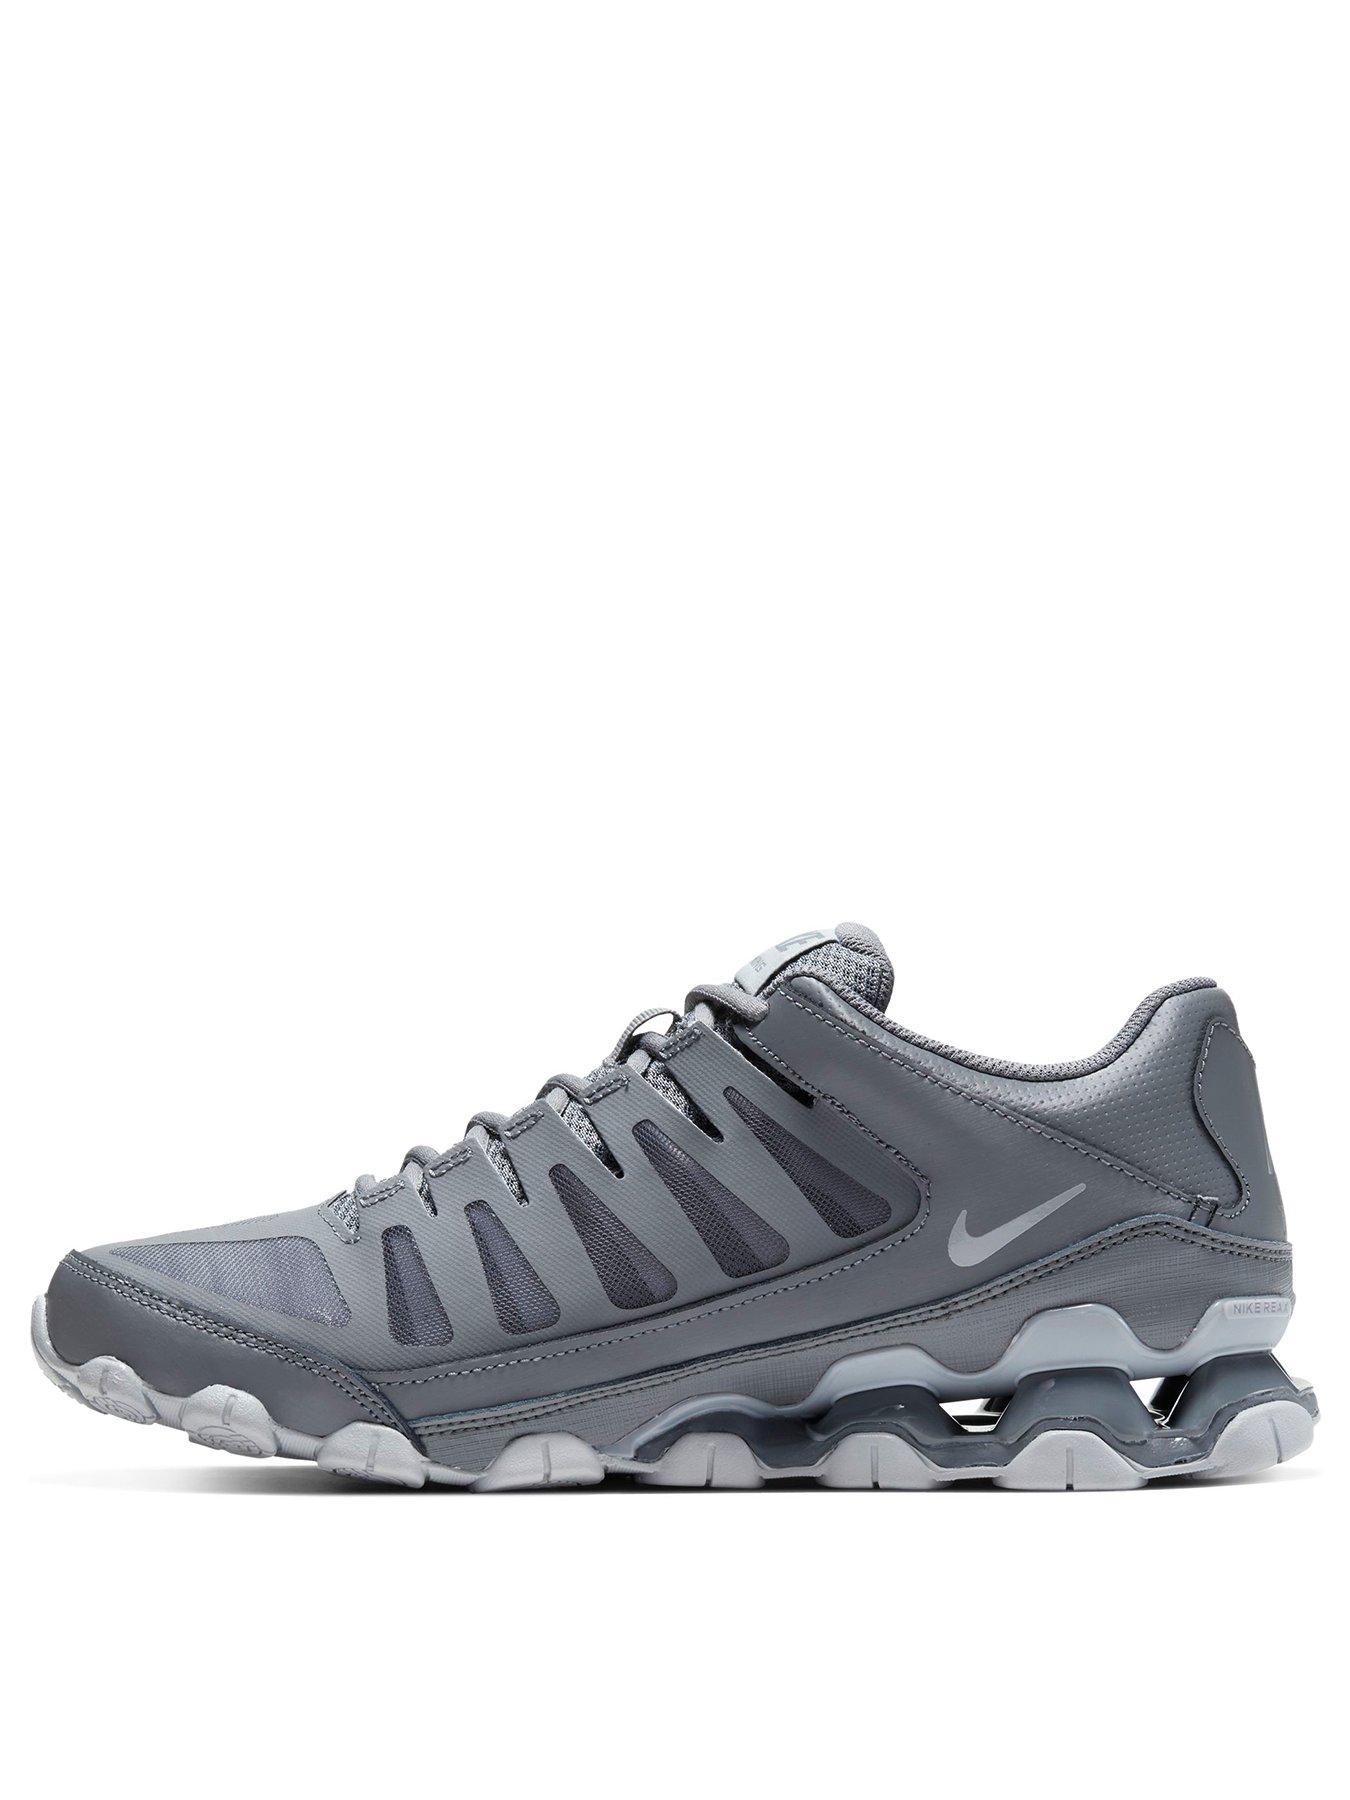 Nike 8 Trail - Grey/Black |